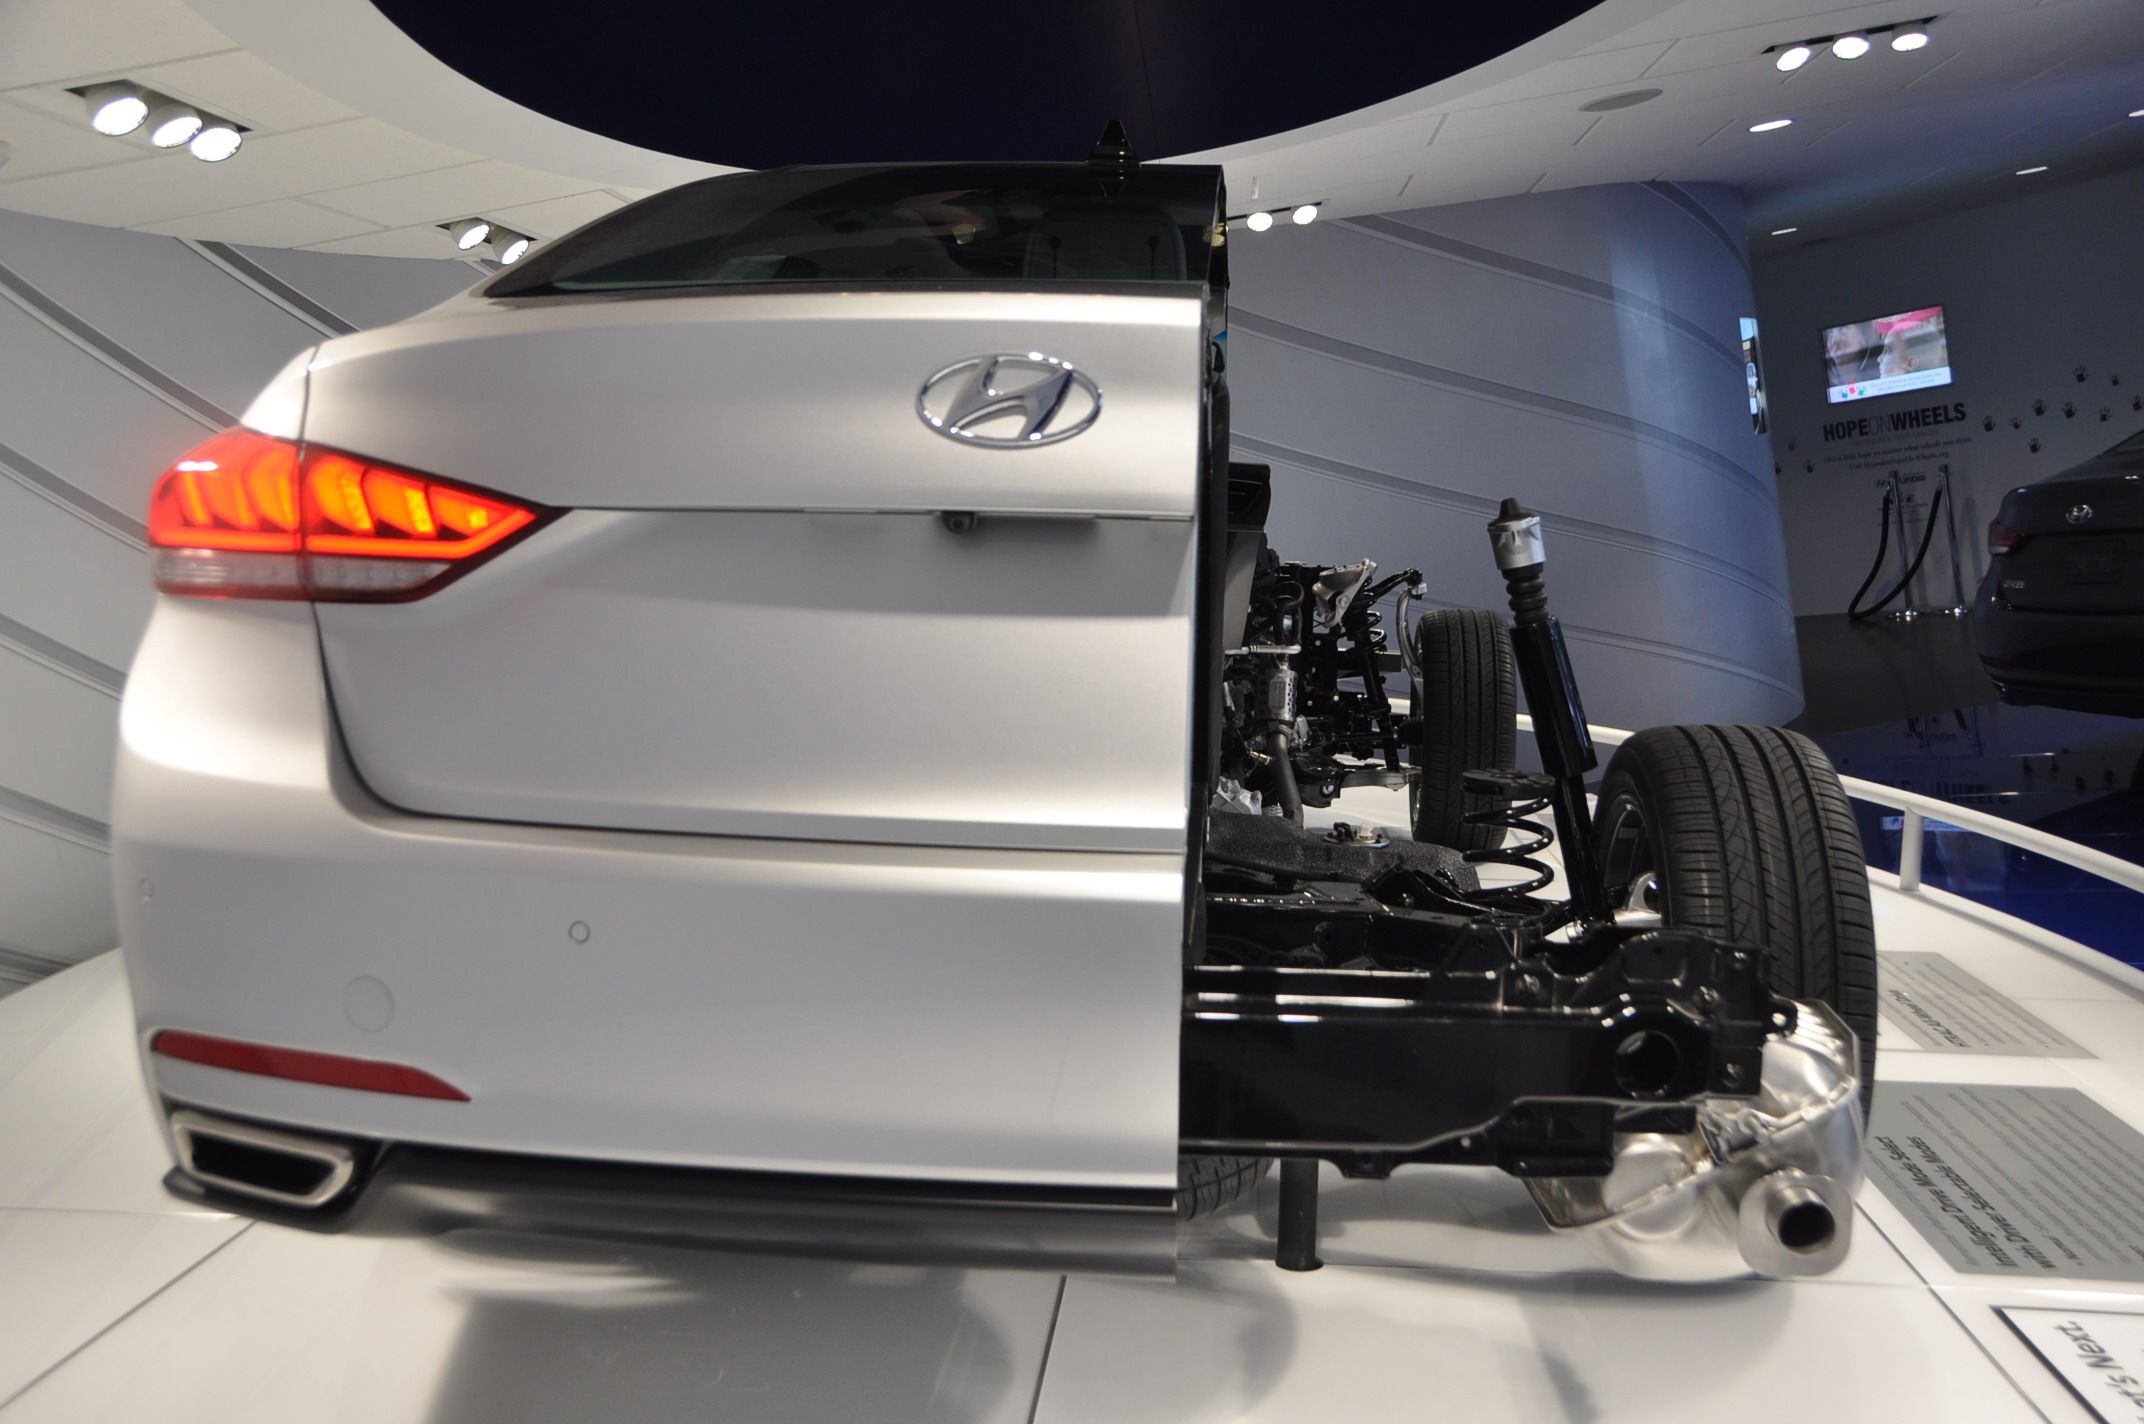 2015 - 2016 Hyundai Genesis